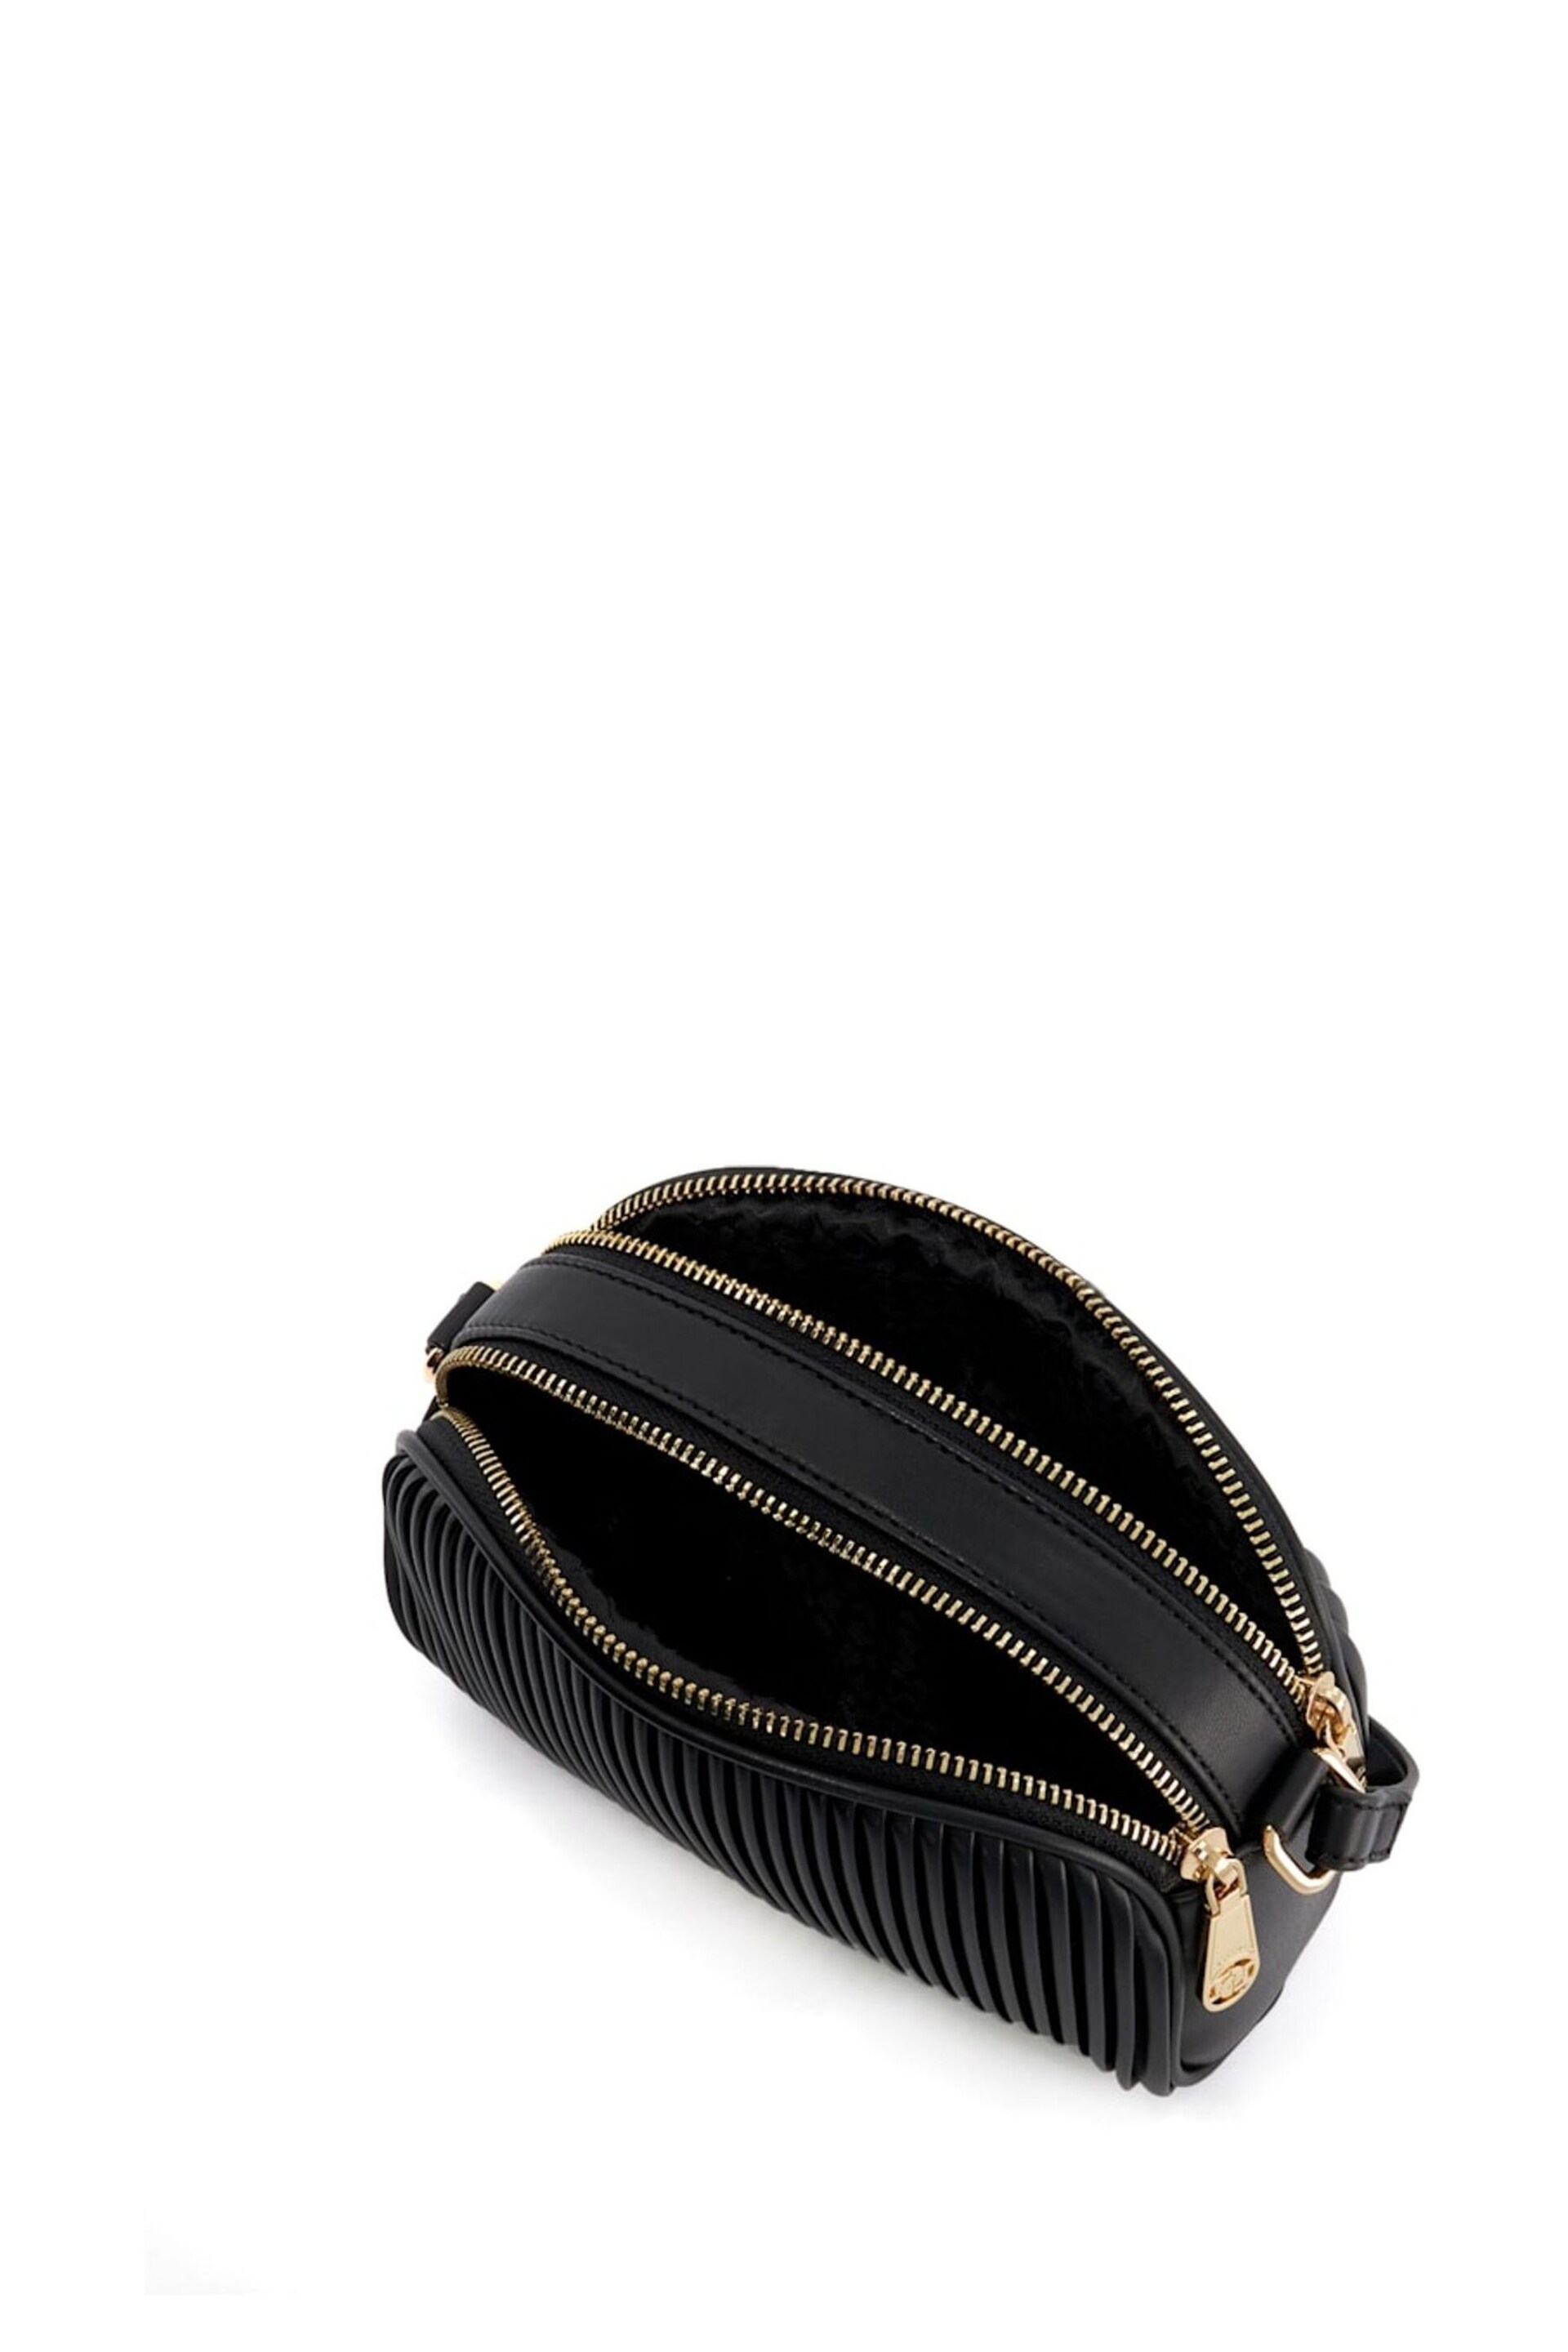 Dune London Black Detail Pleat Cross-Body Mini Bag - Image 5 of 6